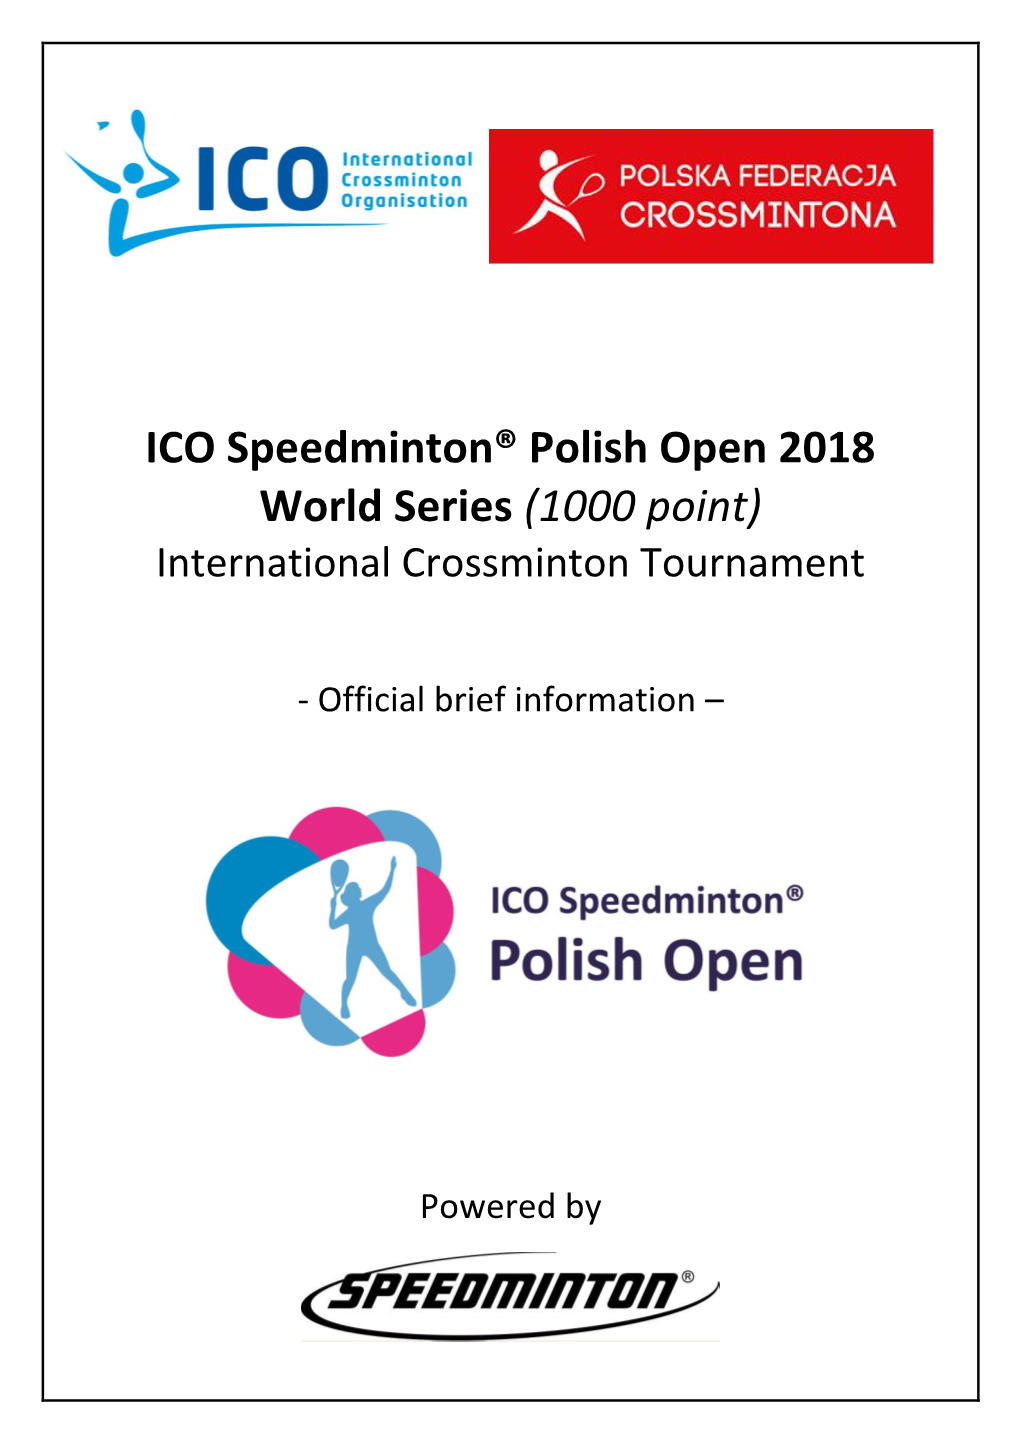 ICO Speedminton® Polish Open 2018 World Series (1000 Point) International Crossminton Tournament